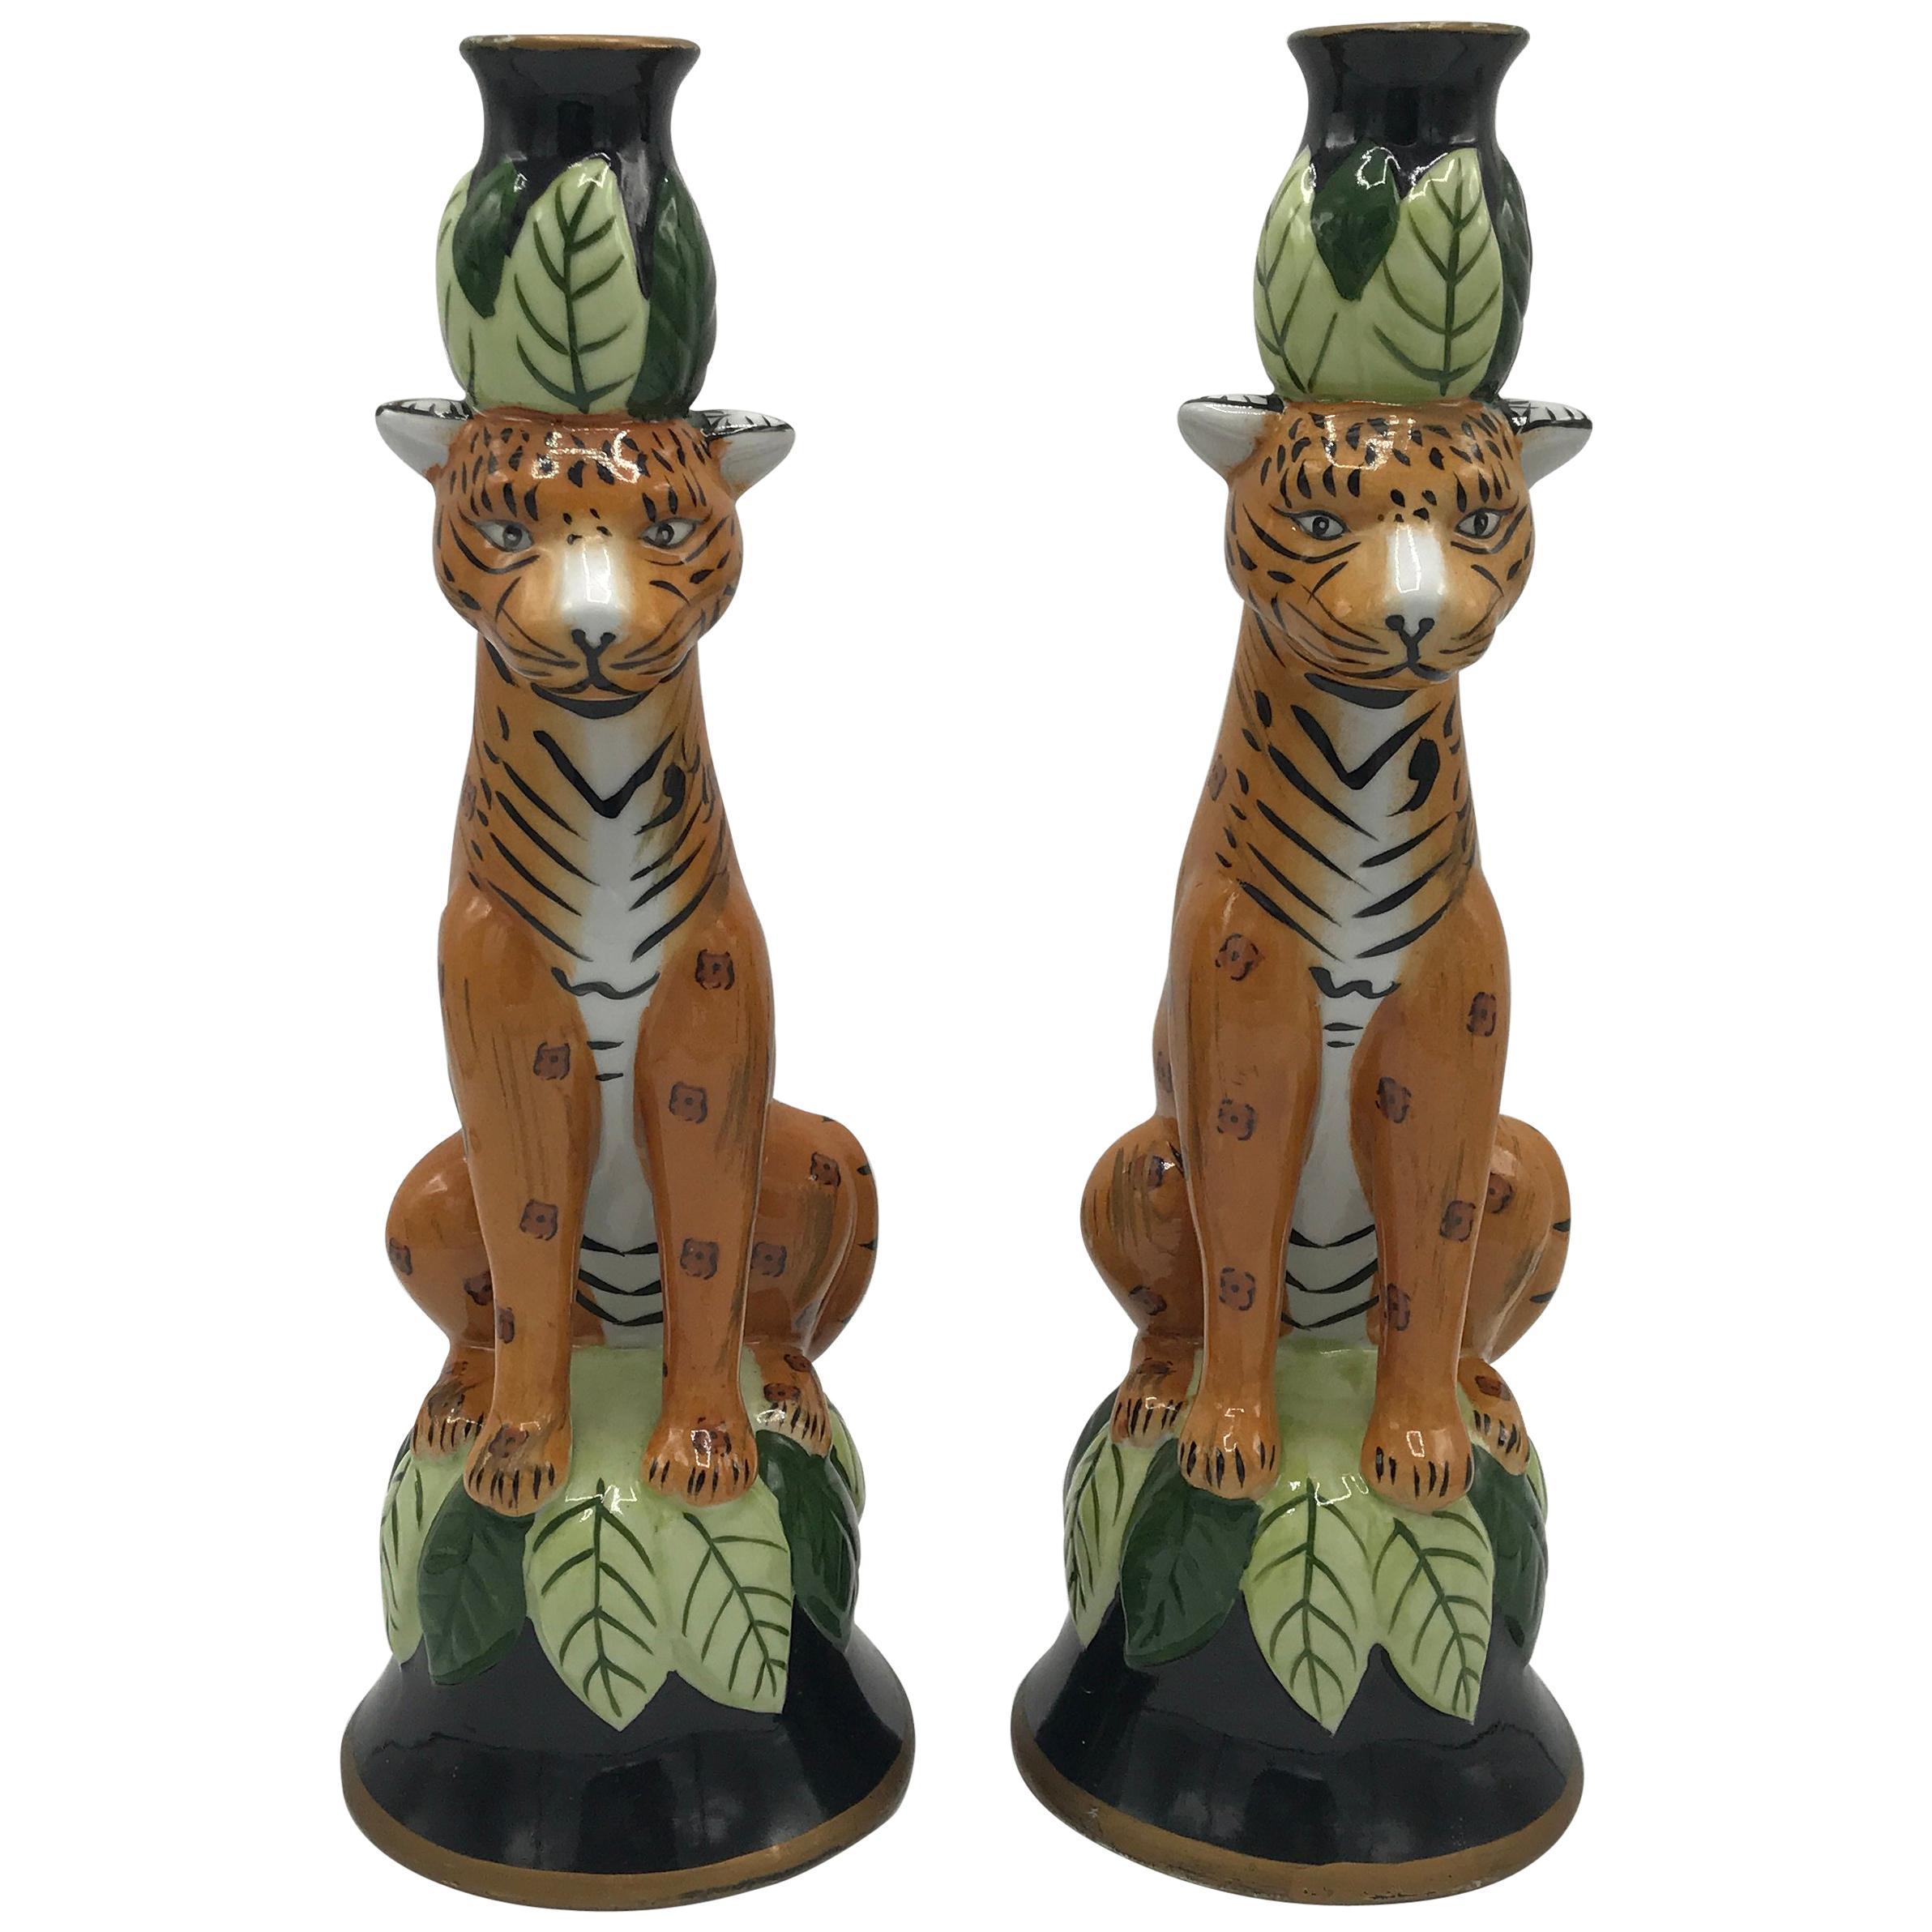 1980s Leopard Sculpture Candlestick Holders, Pair